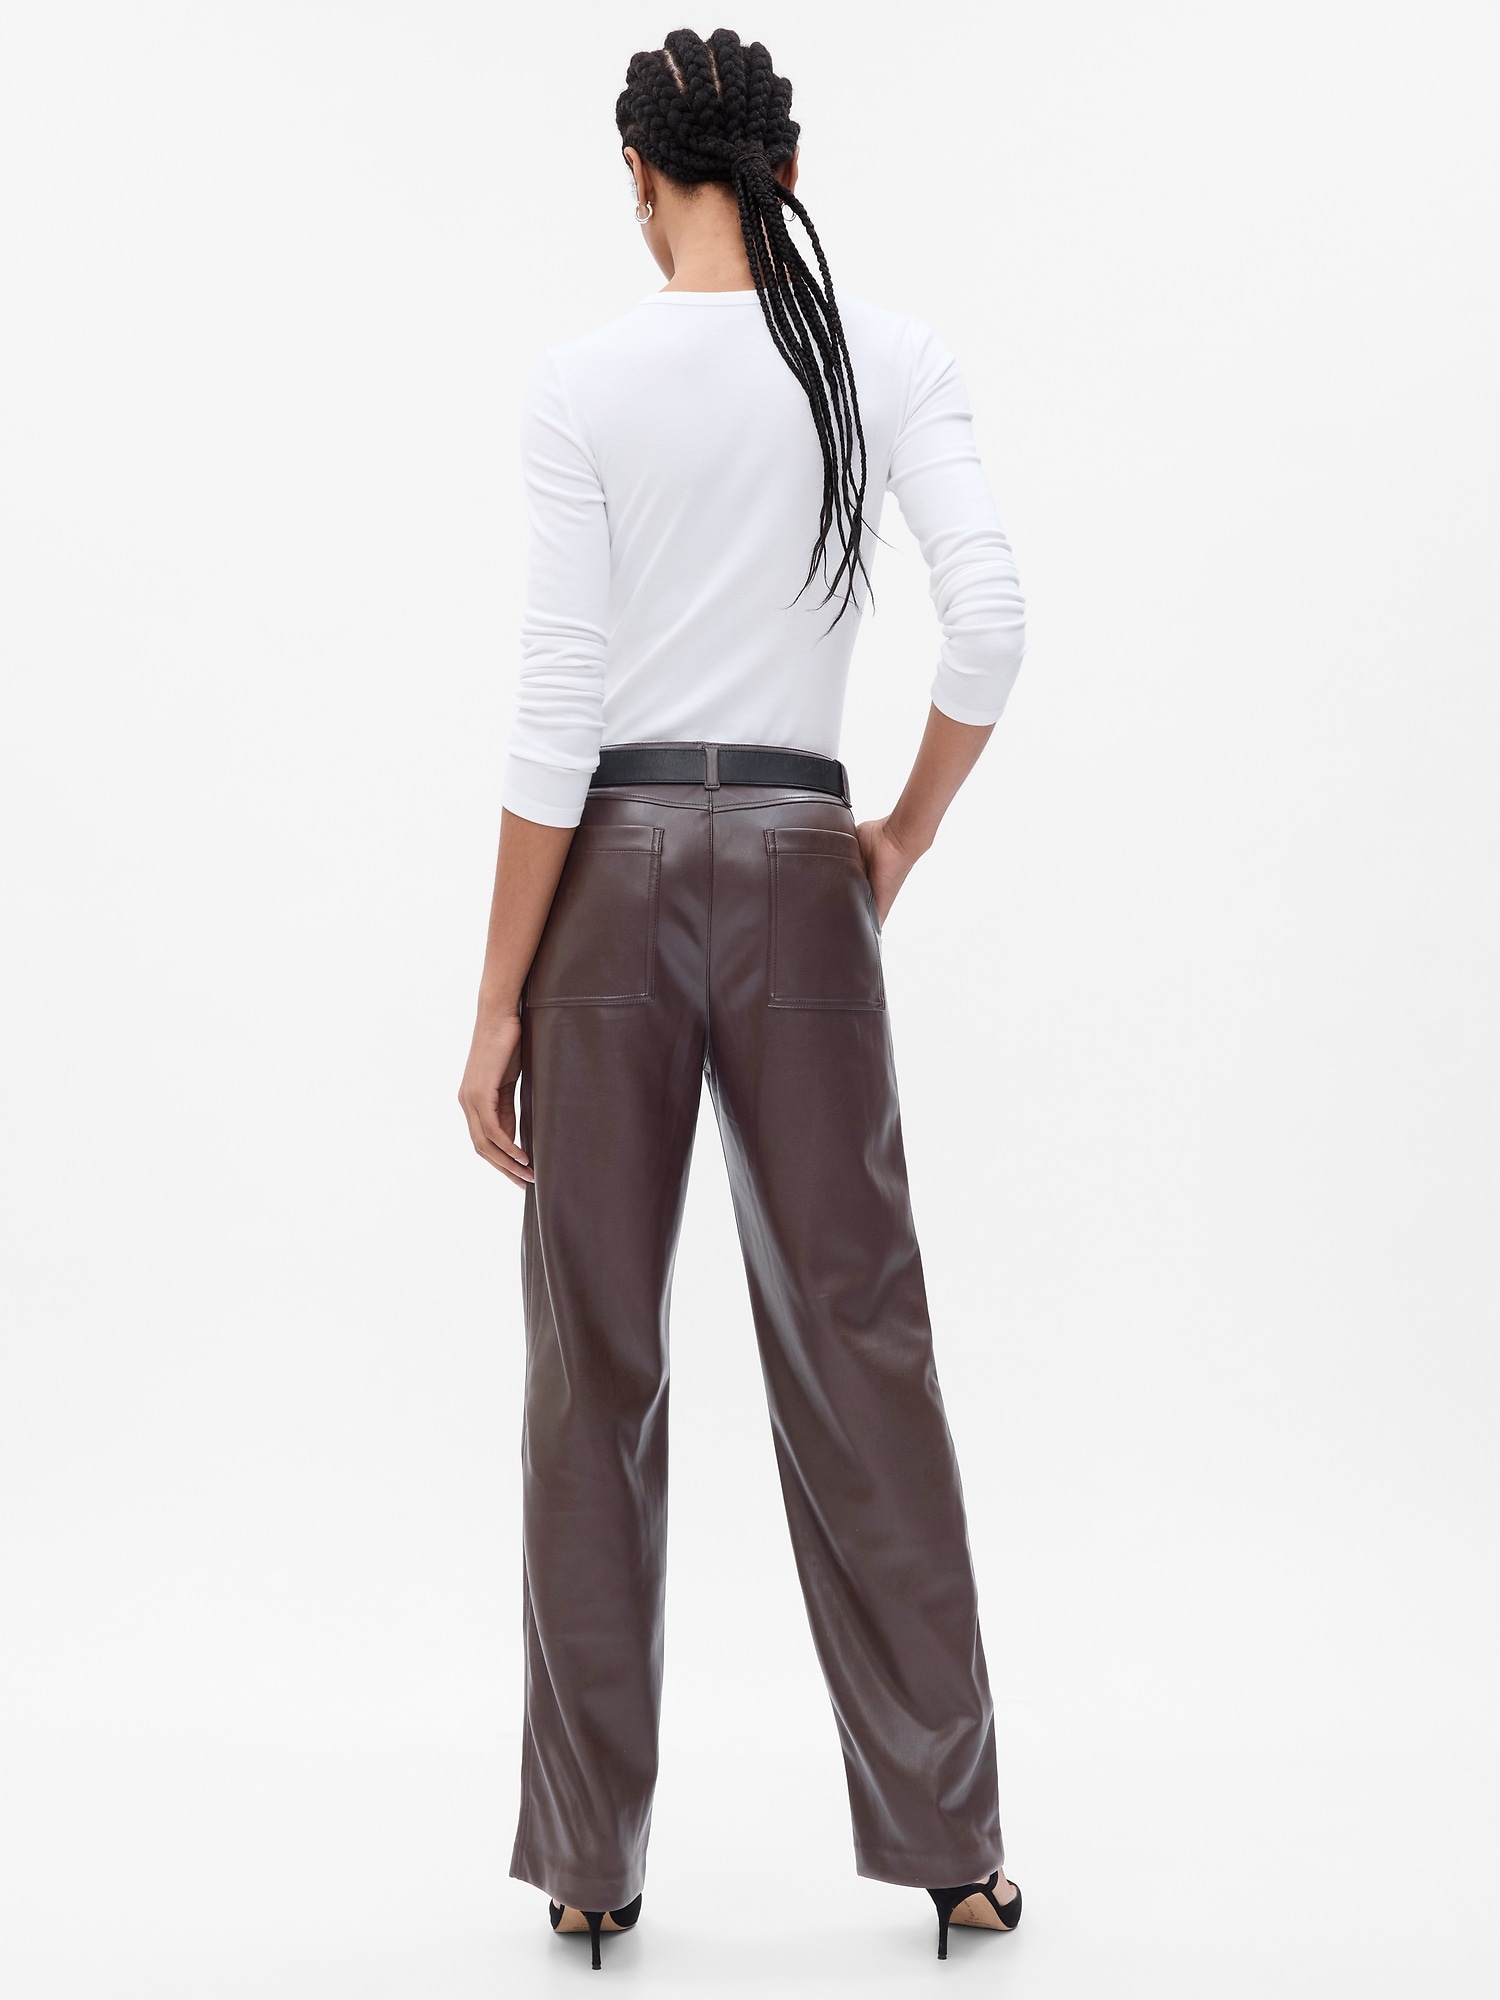 Caché Tan Leather Pants, Size 8